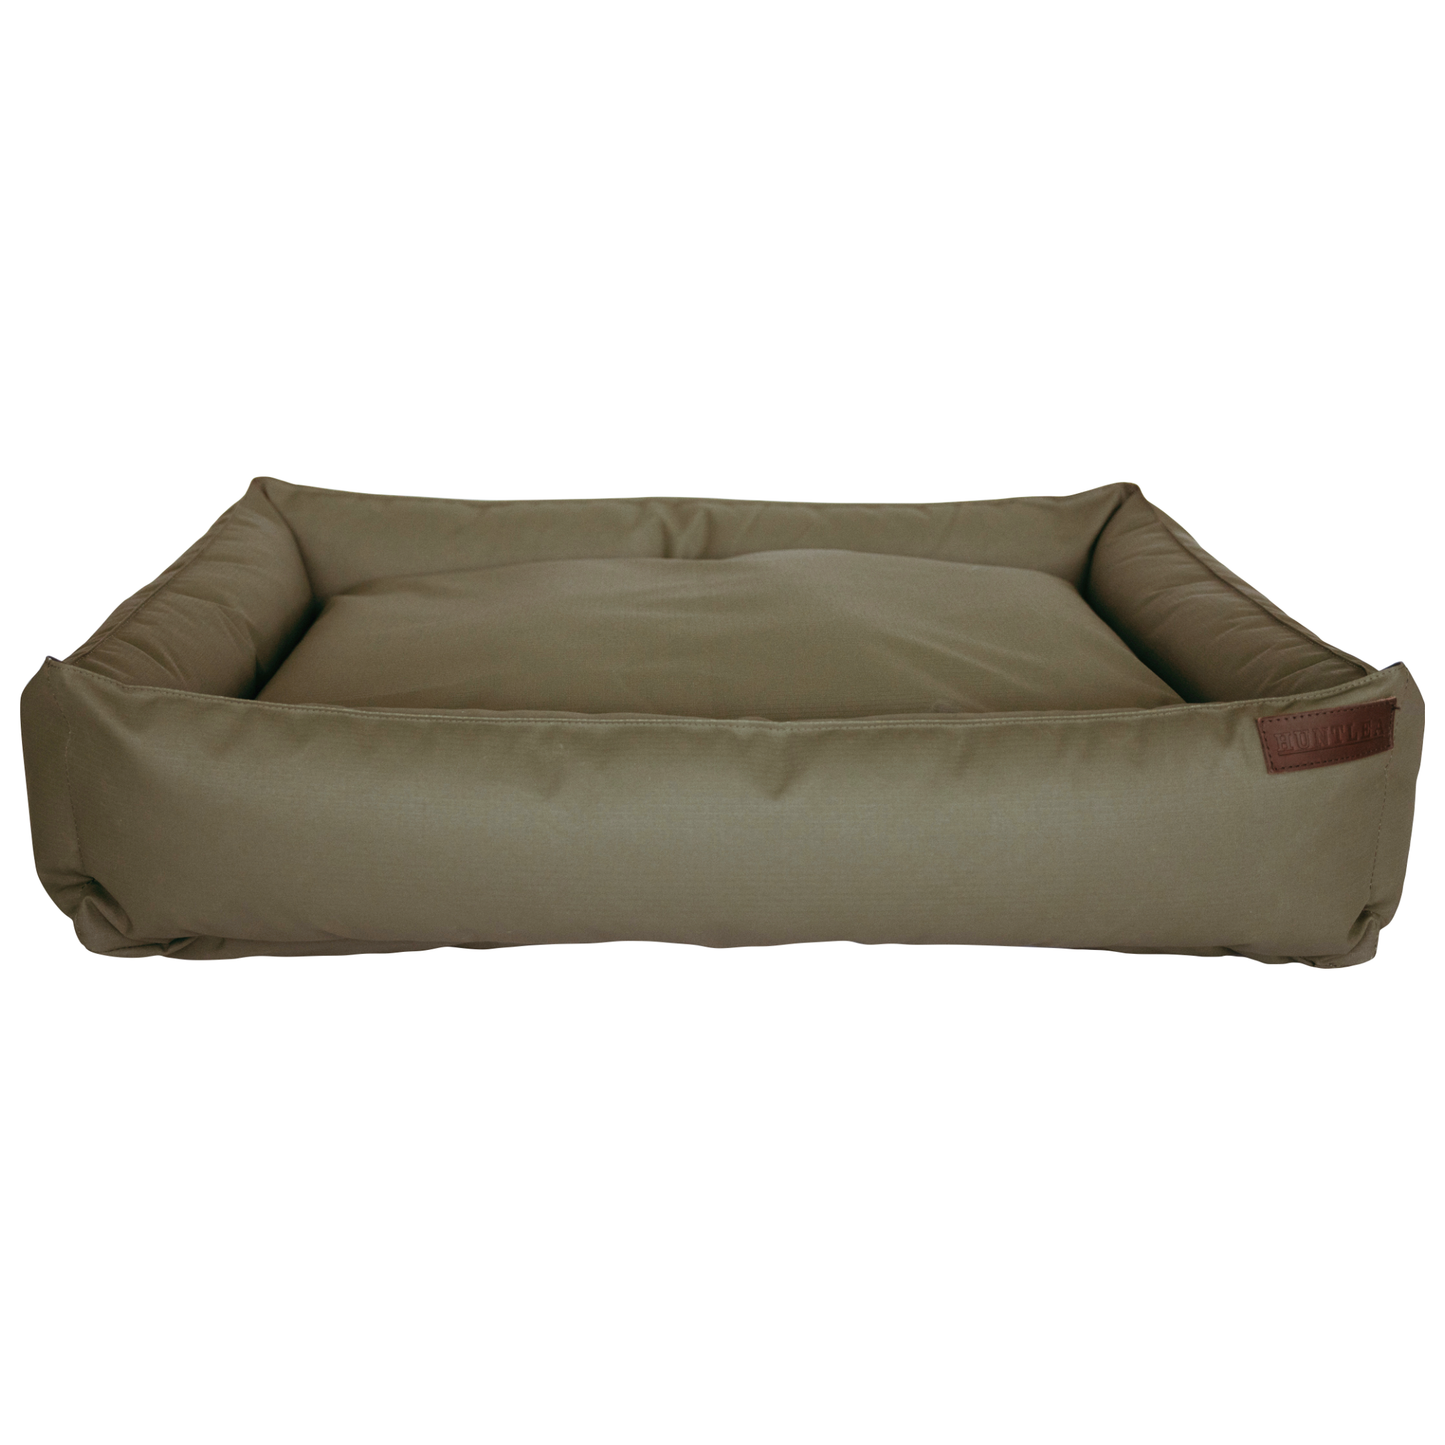 Huntlea Kalahari Slumber Dog Bed Cover